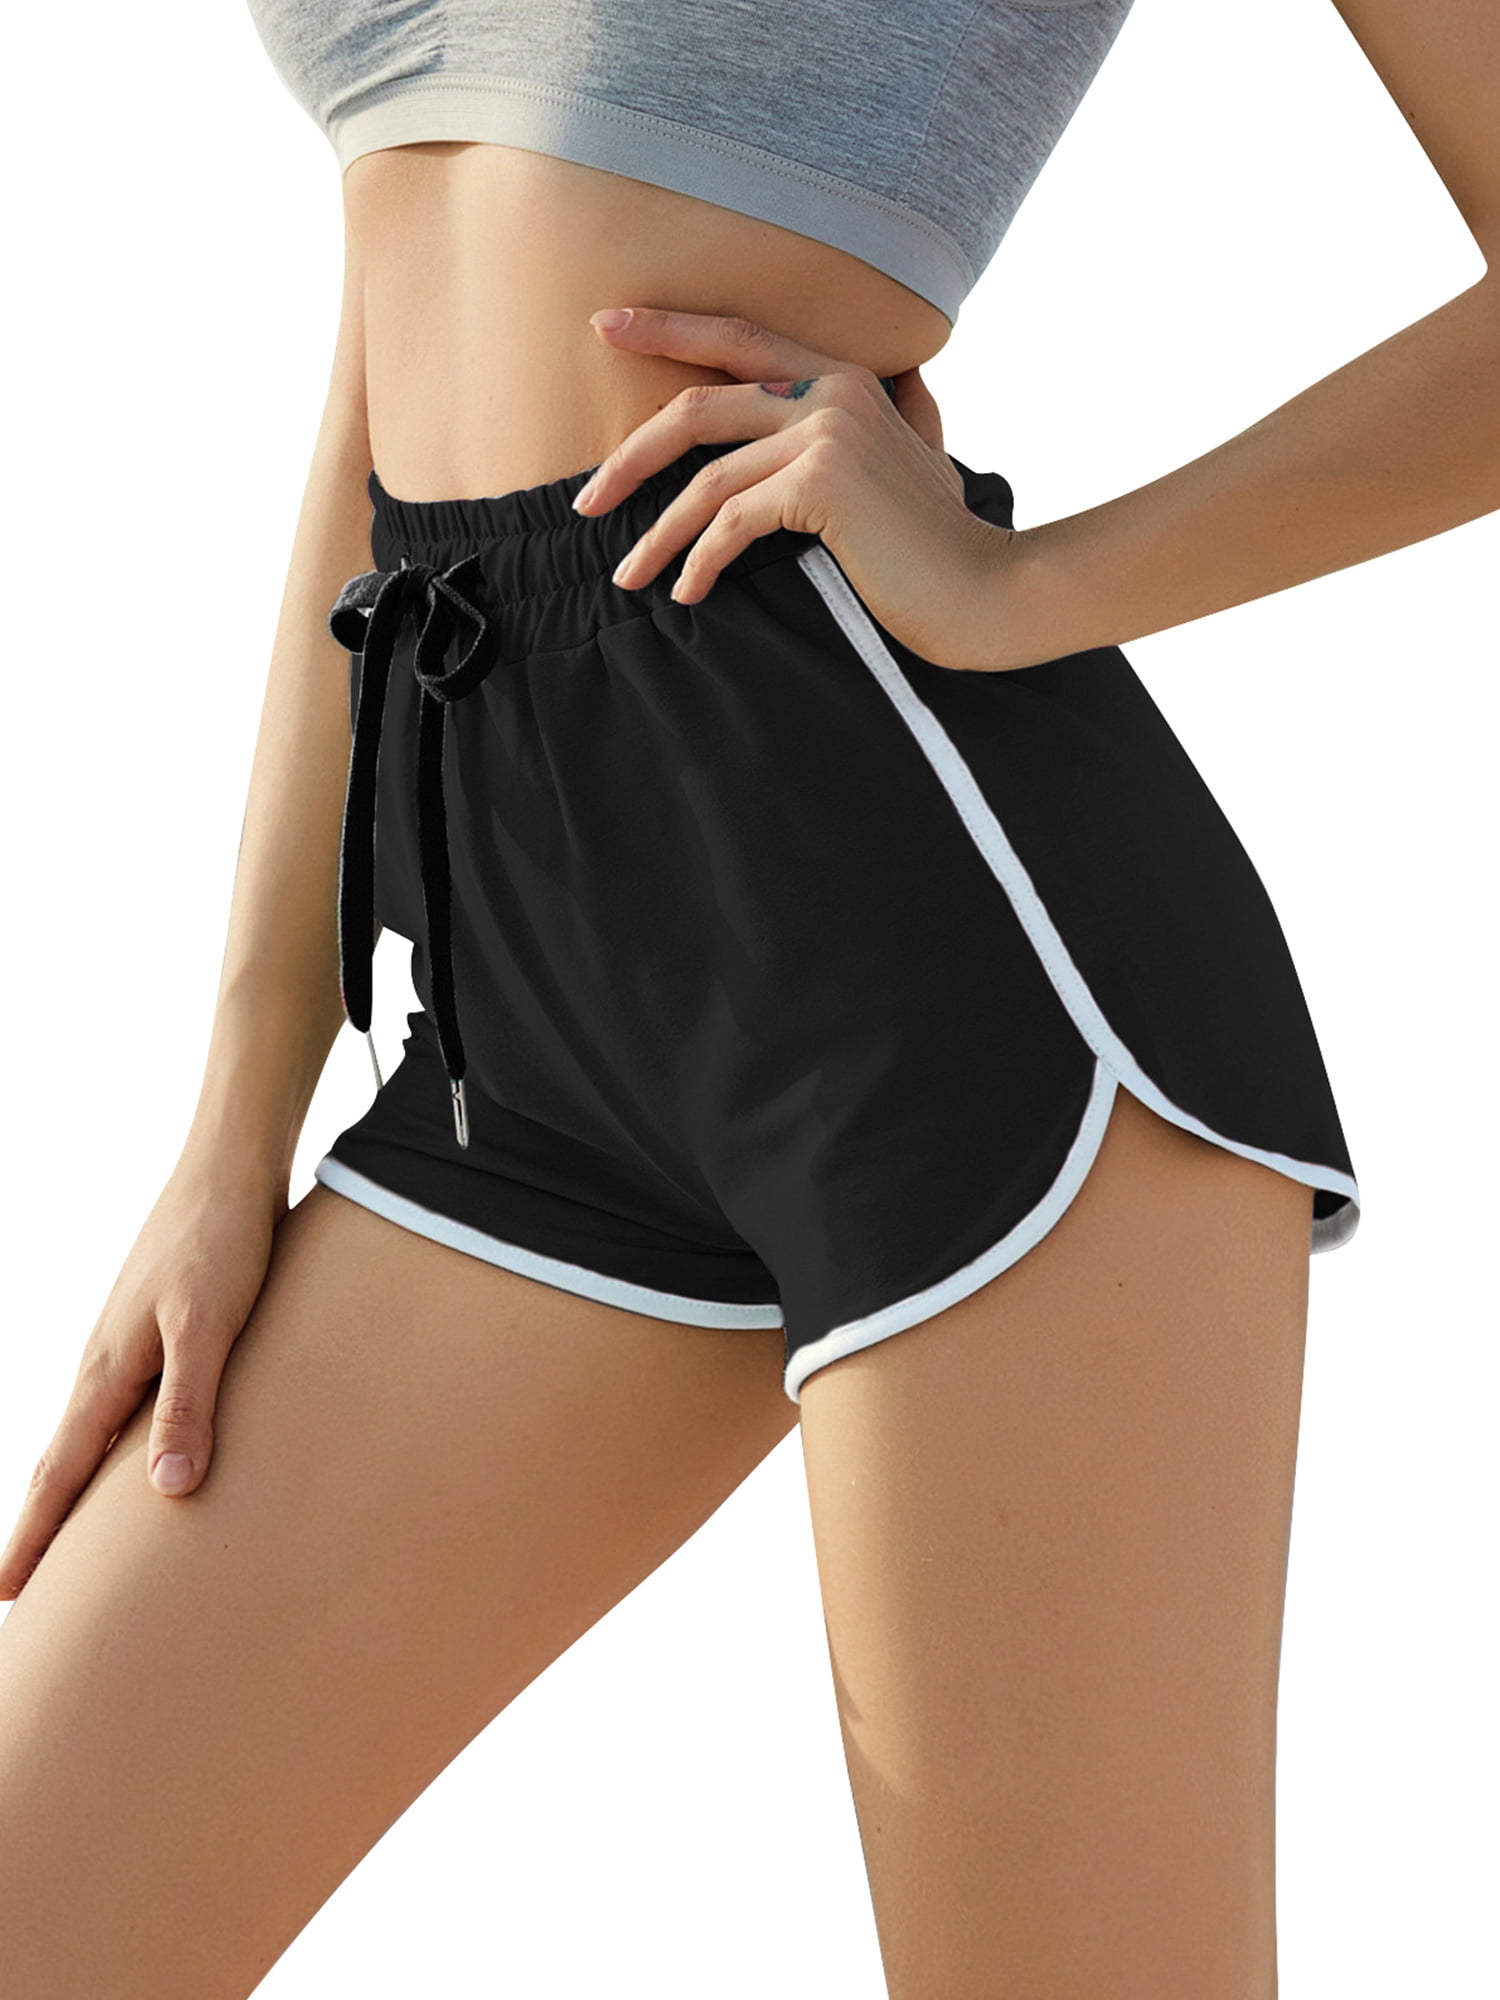 TIFENNY Running Yoga Pants for Women Elastic Force High Waist Gym Short Abdomen Control Training Shorts Sweatpants 